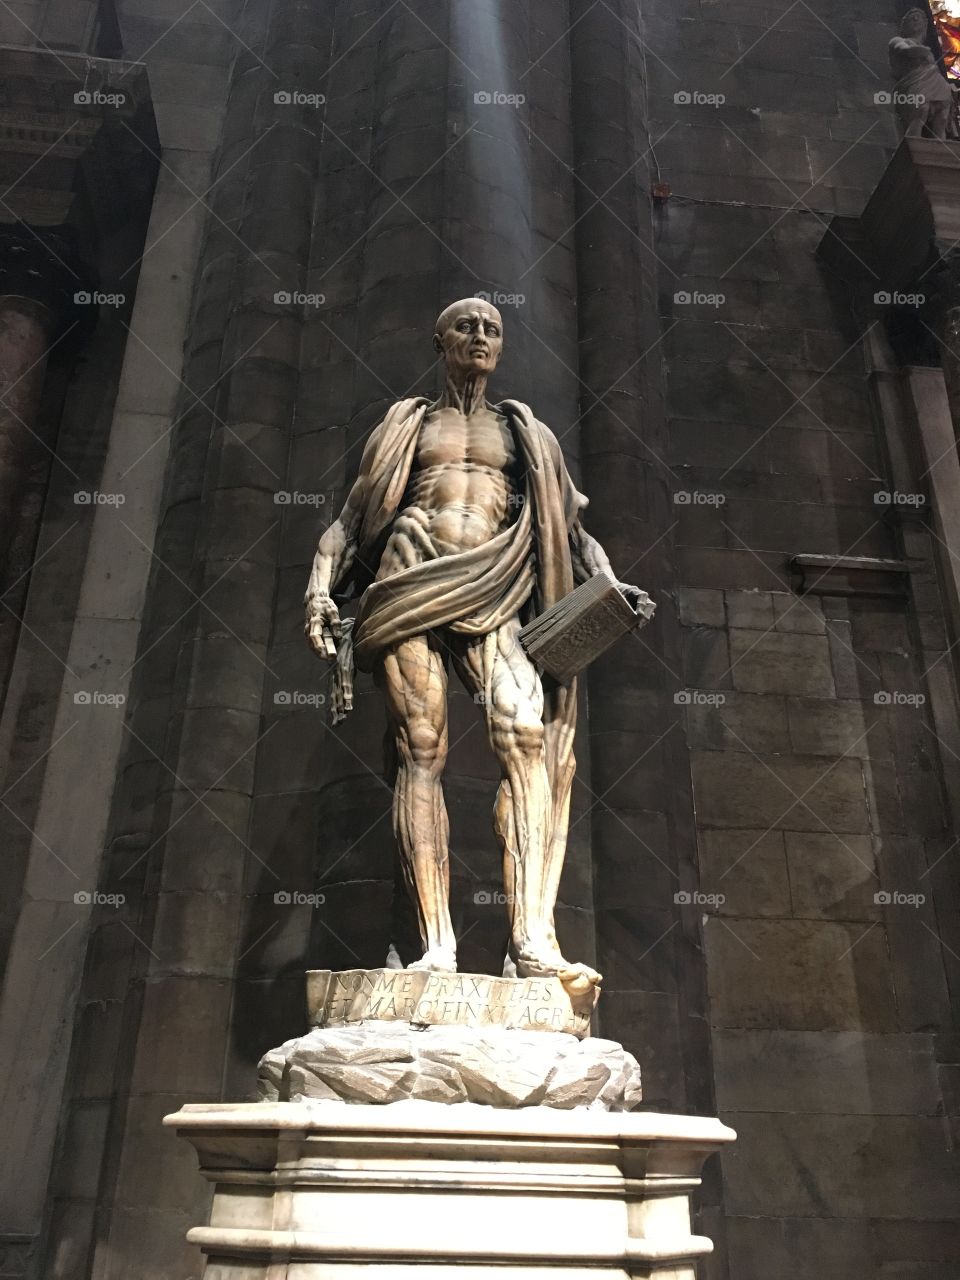 Saint statue inside Duomo